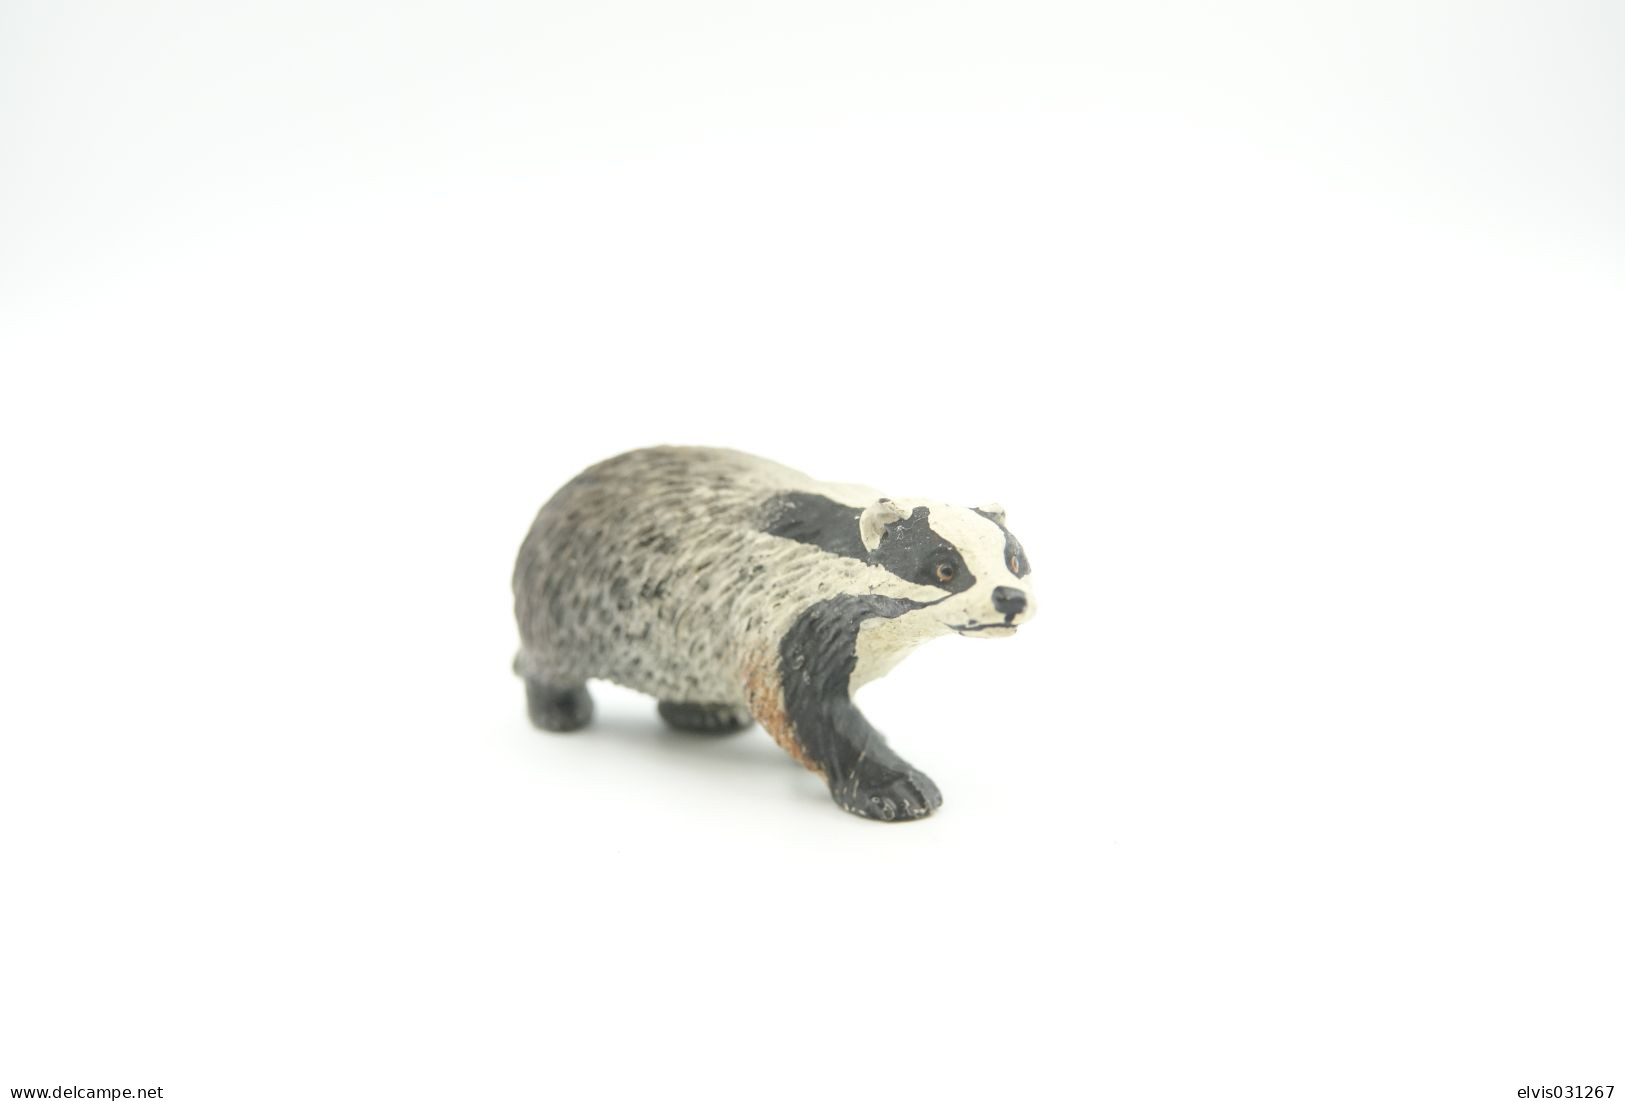 Elastolin, Lineol Hauser, Animals Badger N°6308, Vintage Toy 1930's - Small Figures